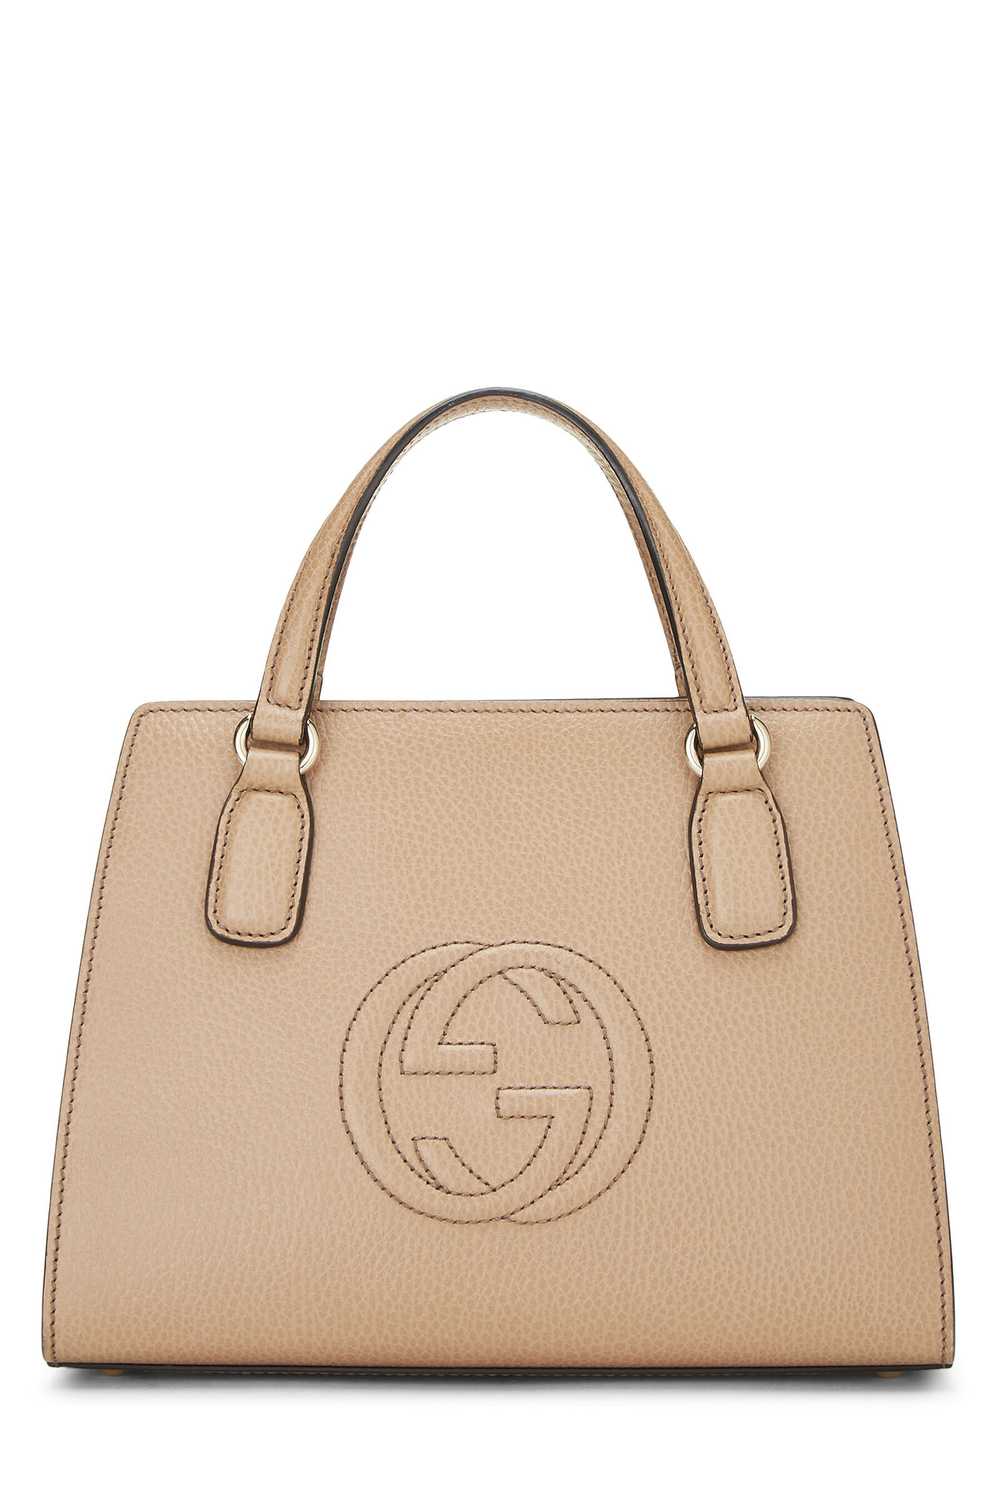 Beige Grained Leather Soho Handbag - image 1